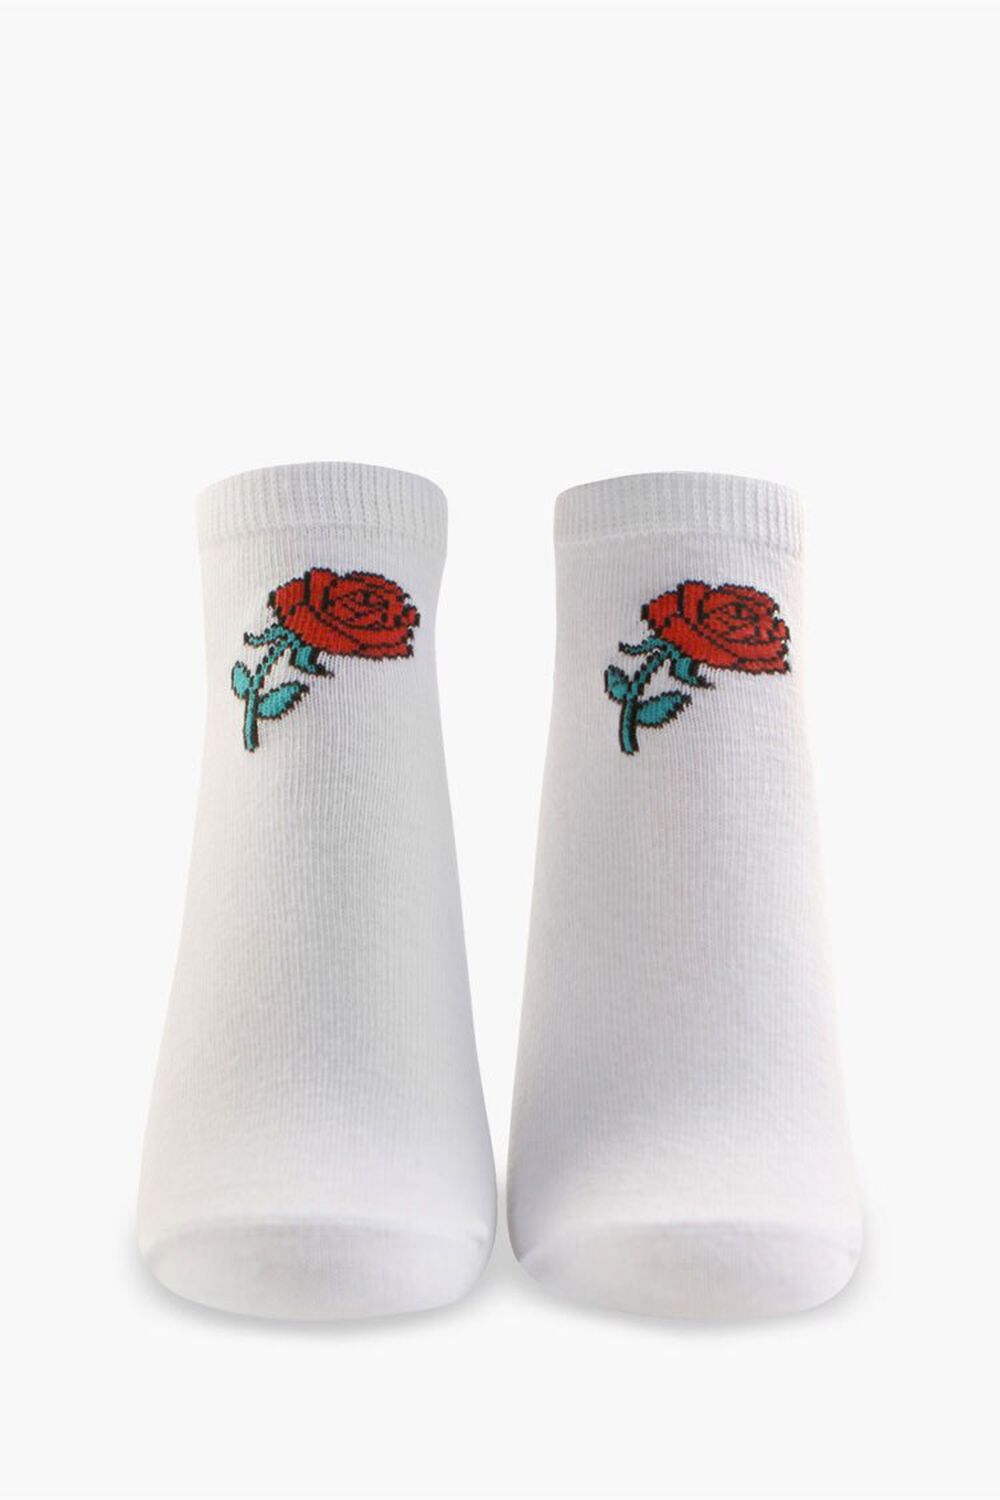 WHITE Rose Graphic Ankle Socks, image 1